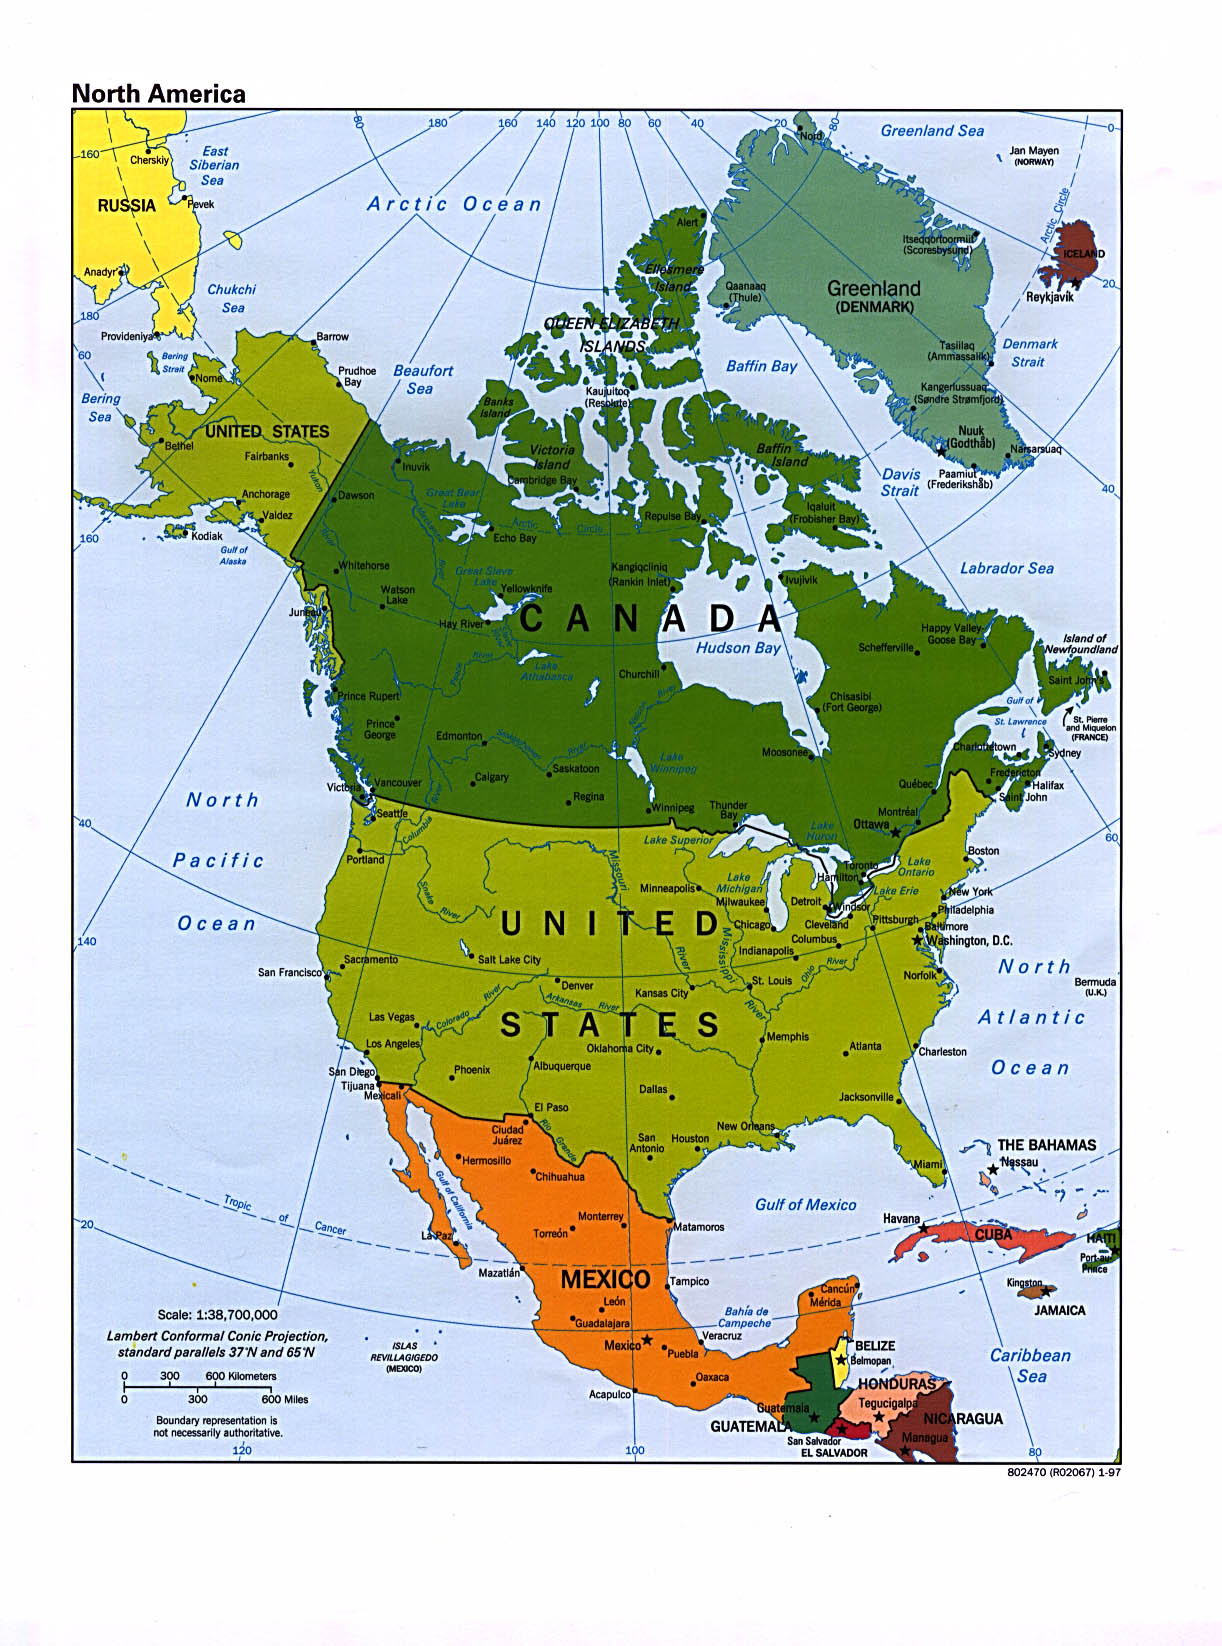 kuzey amerika haritasi ulkeler